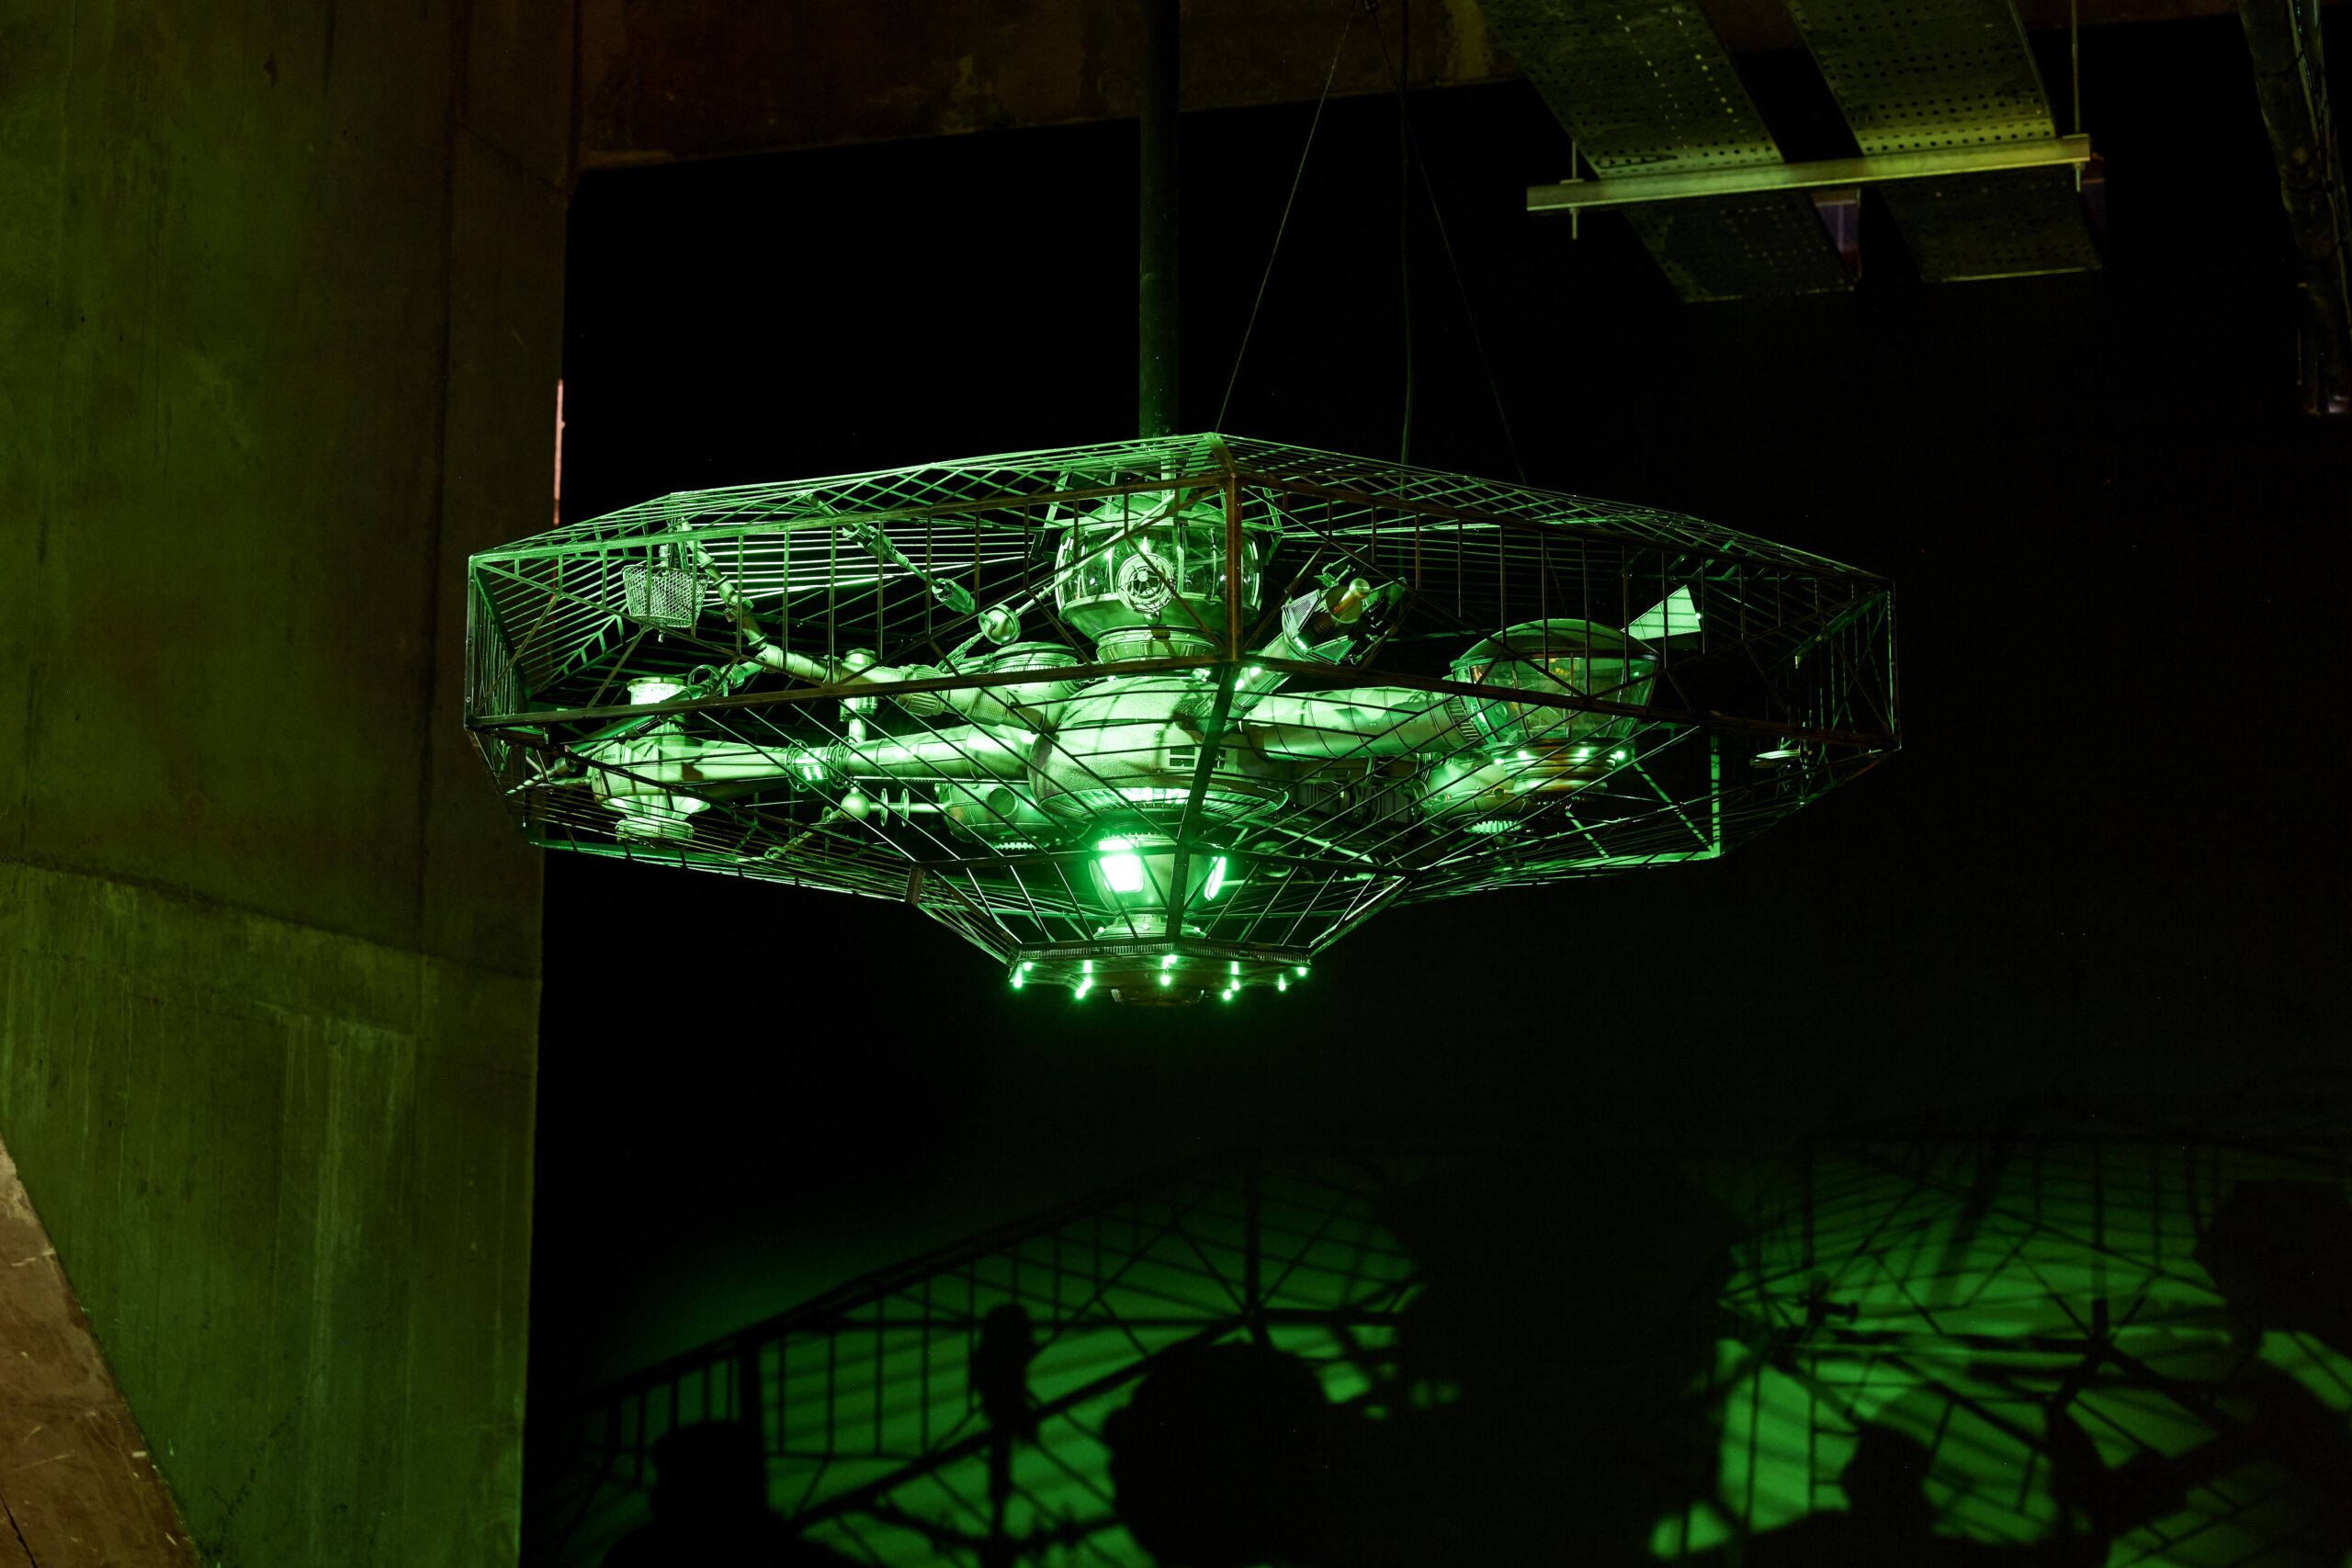 Spaceship, Asteroid City Exhibition, 180 Studios, London